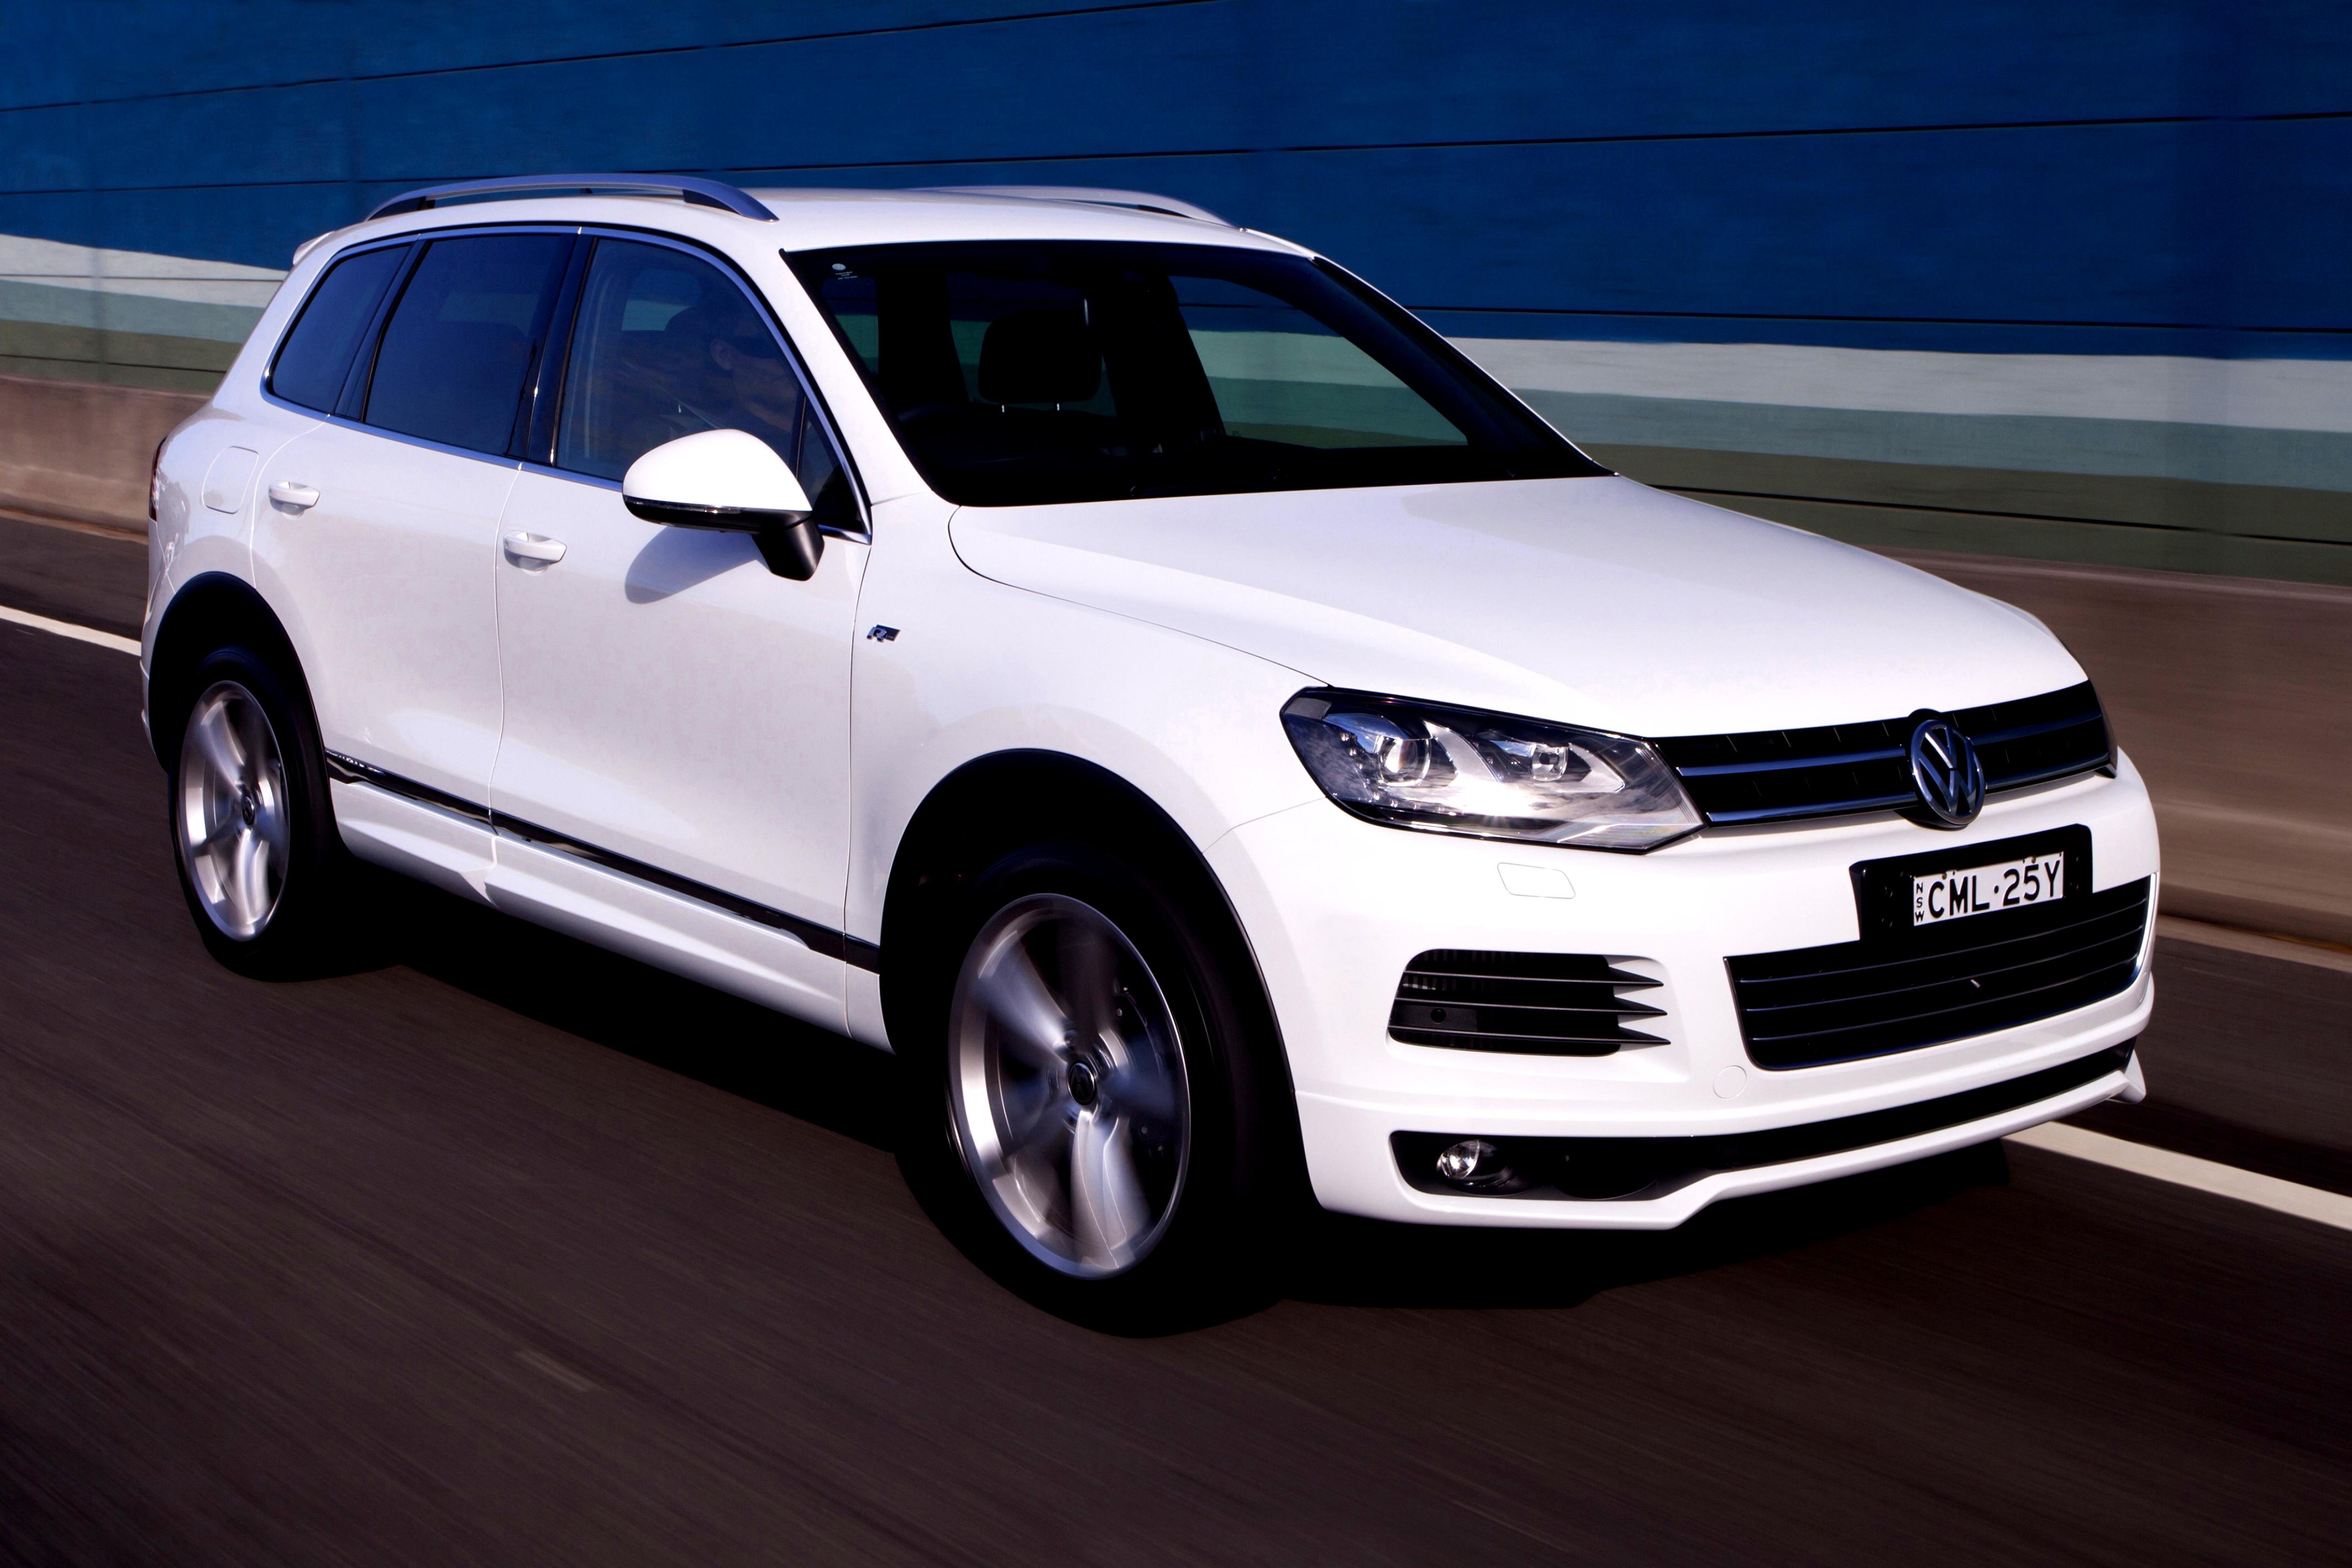 Volkswagen Touareg 2014 #7